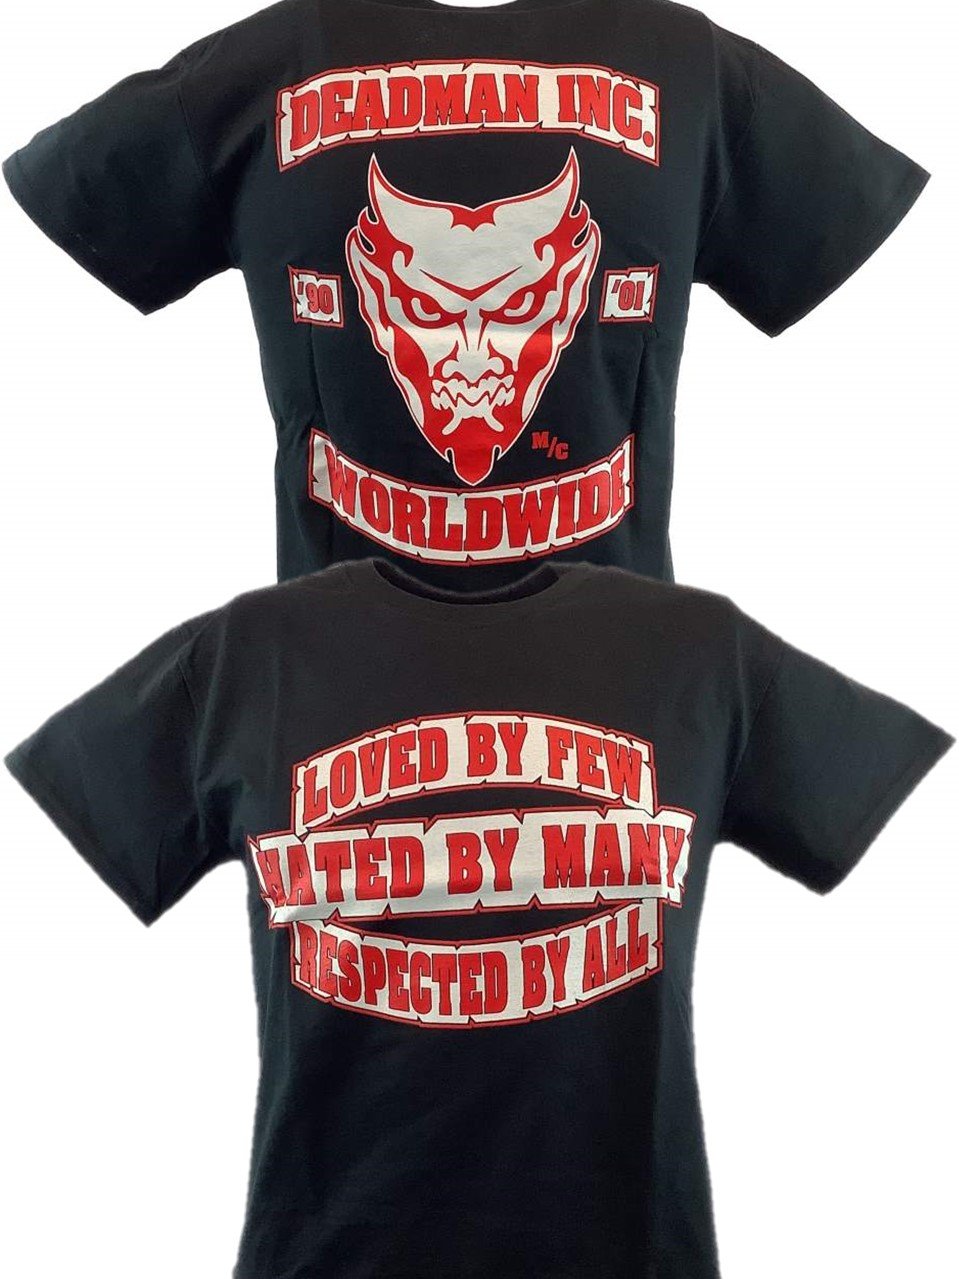 Undertaker Deadman Inc Loved By Few Respected By All Mens Black T-shirt